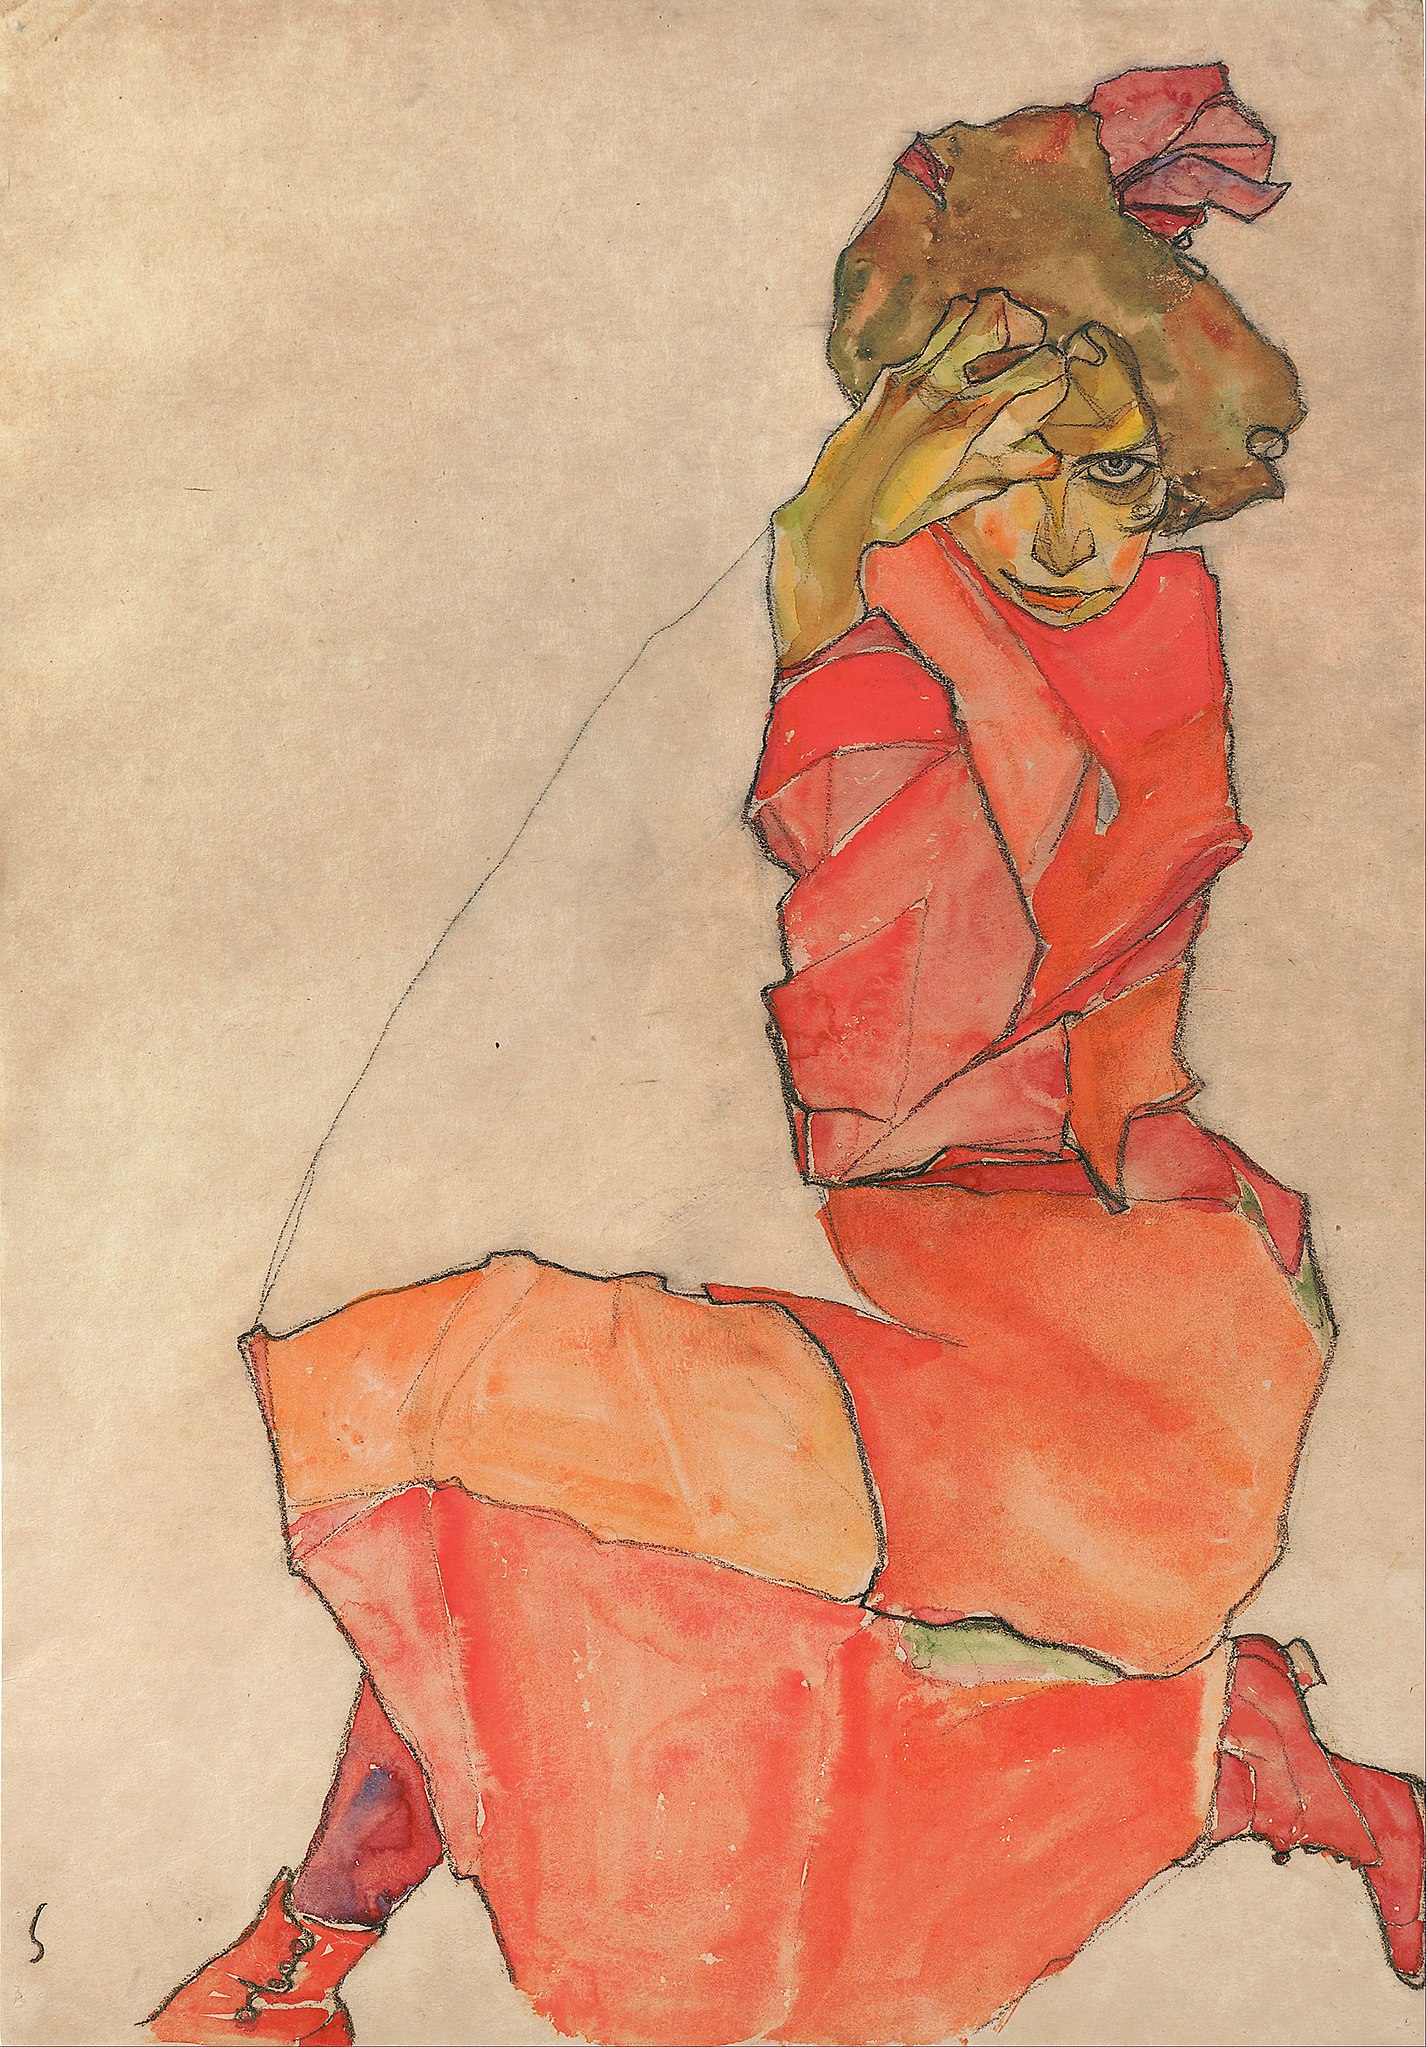 Knielende vrouw in oranjerode jurk by Egon Schiele - 1910 - 44,6 x 31 cm Leopold Museum